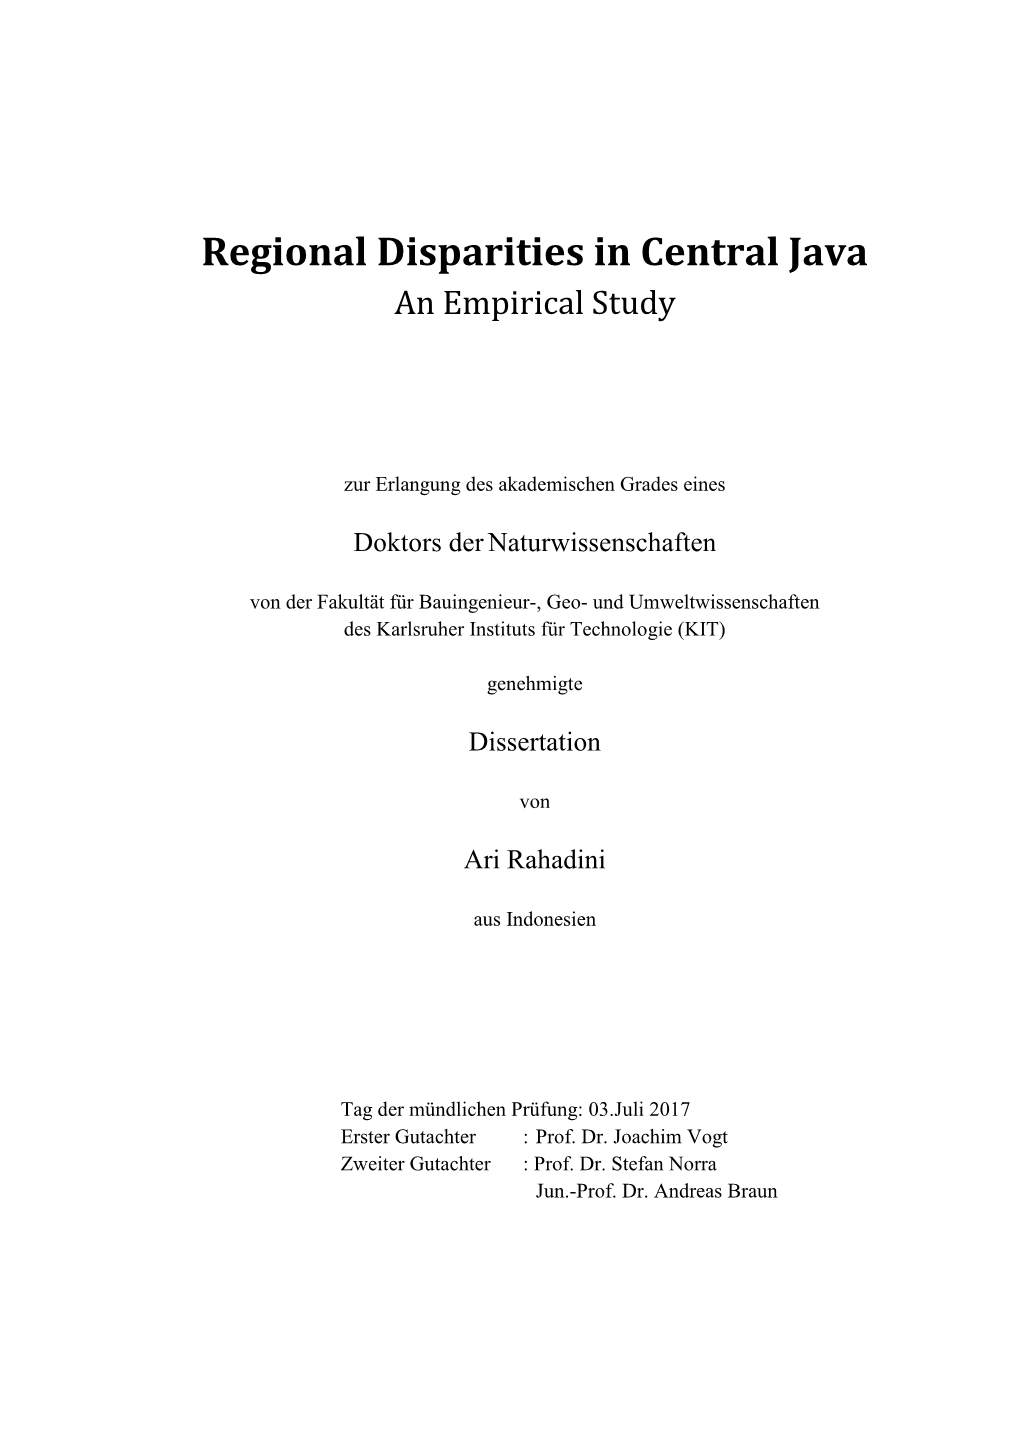 Regional Disparities in Central Java. an Empirical Study